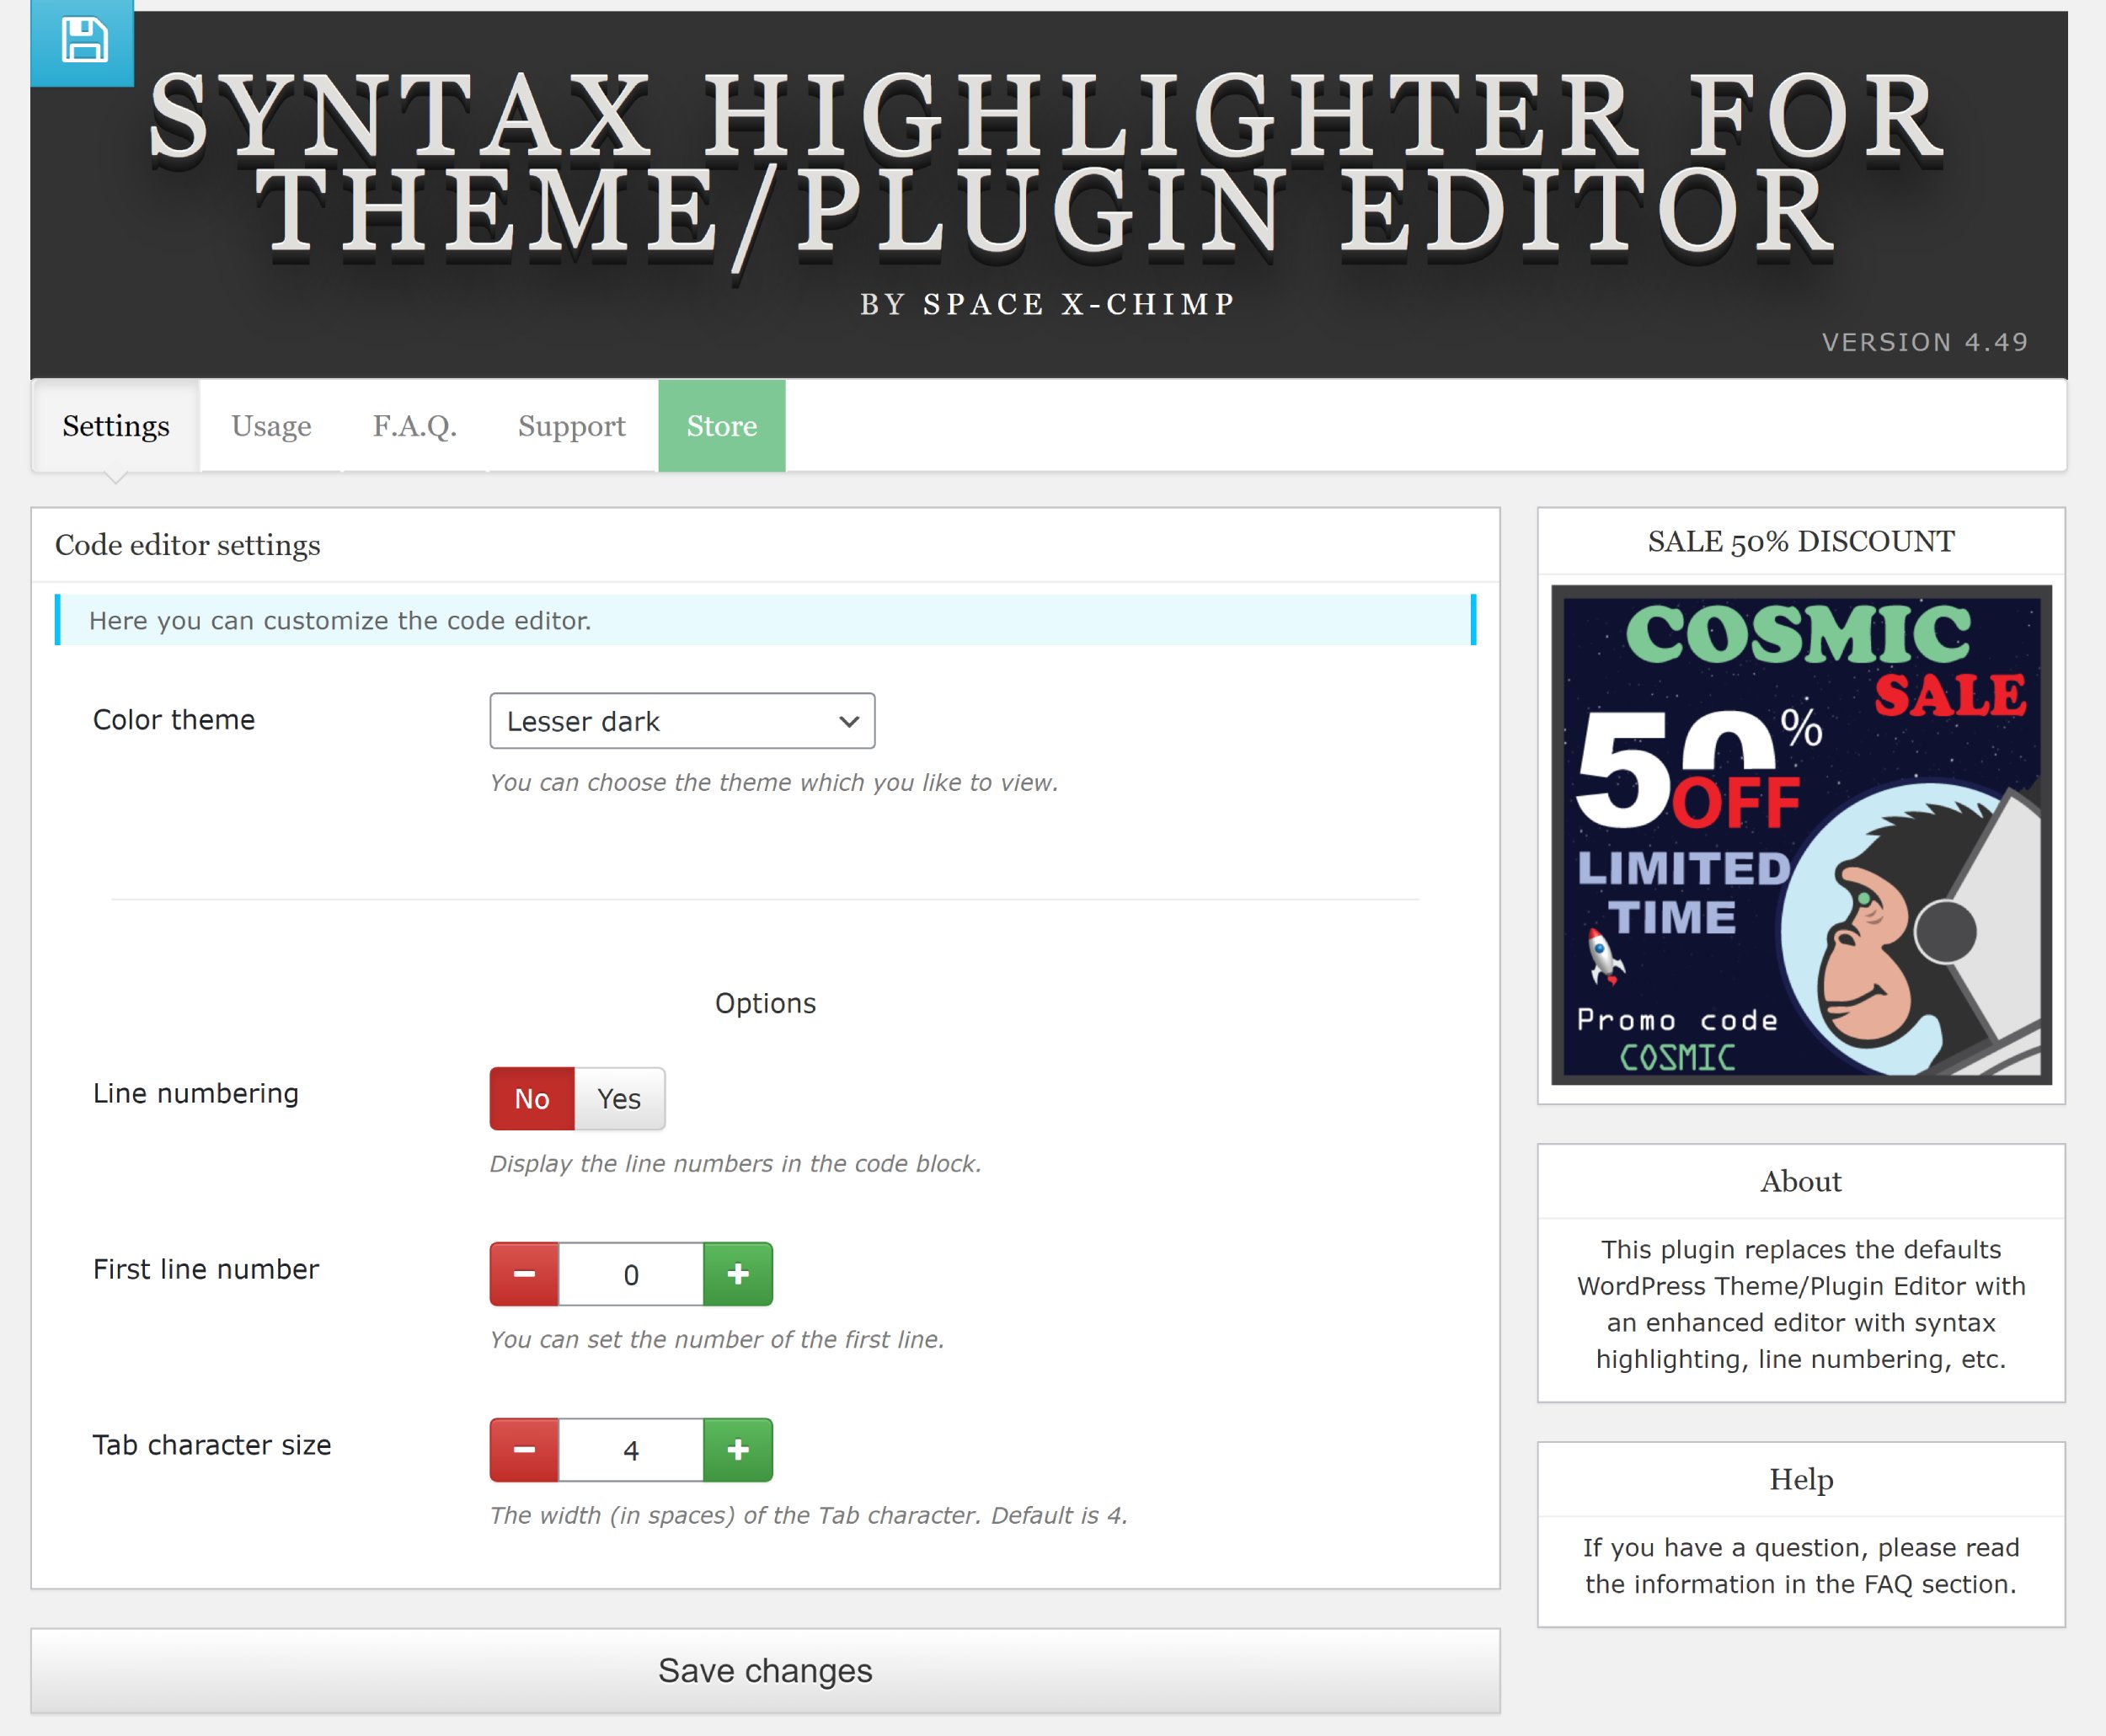 Syntax Highlighter for Theme/Plugin Editor